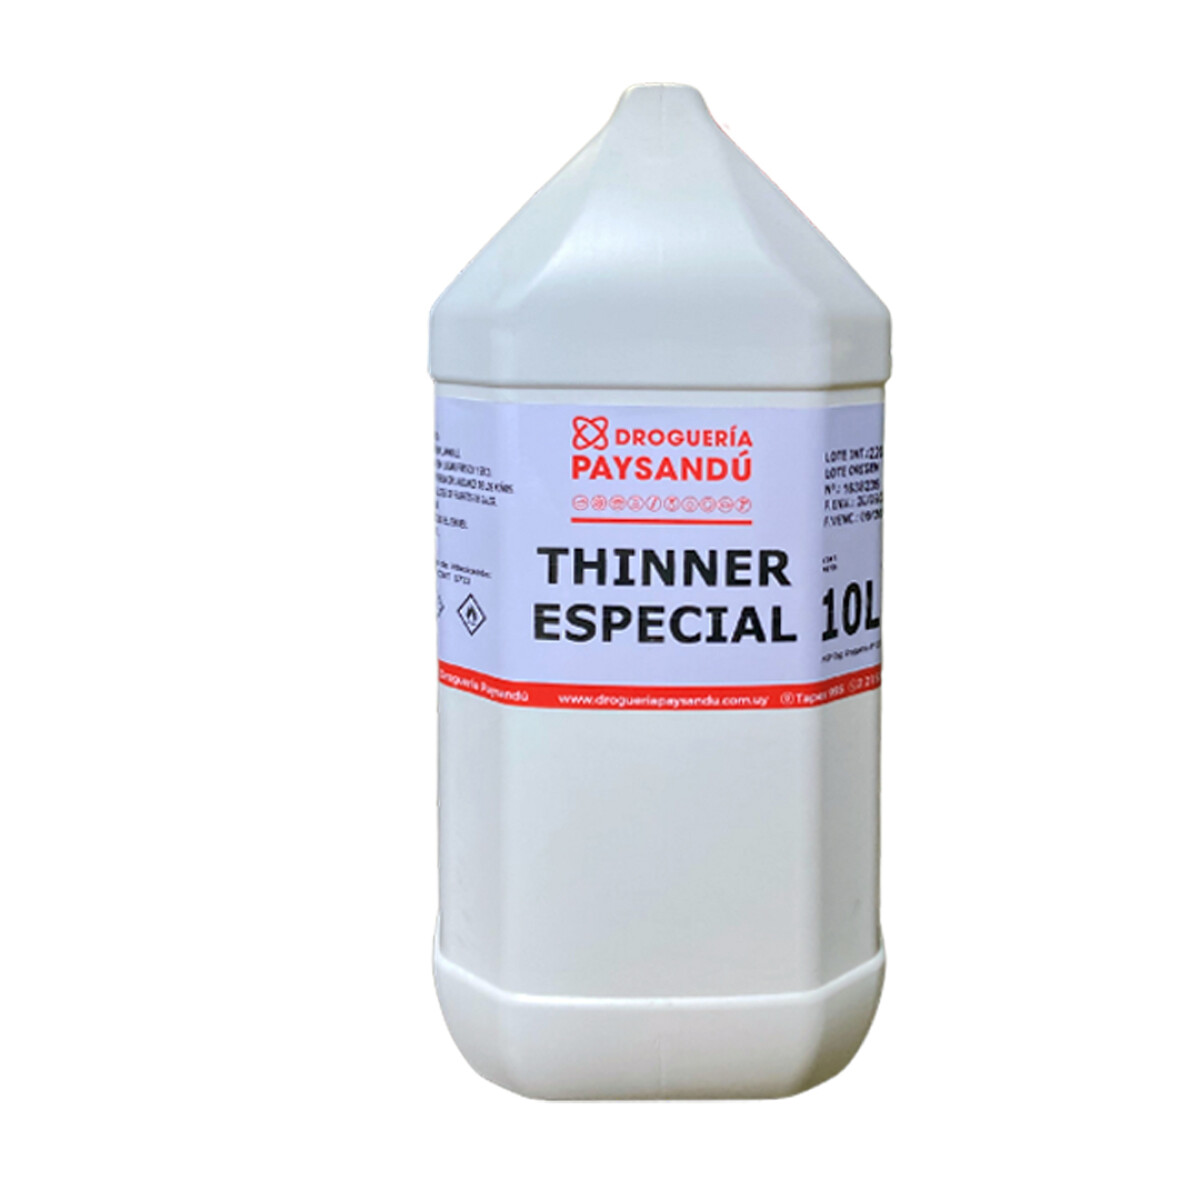 Thinner Especial - 10 L 